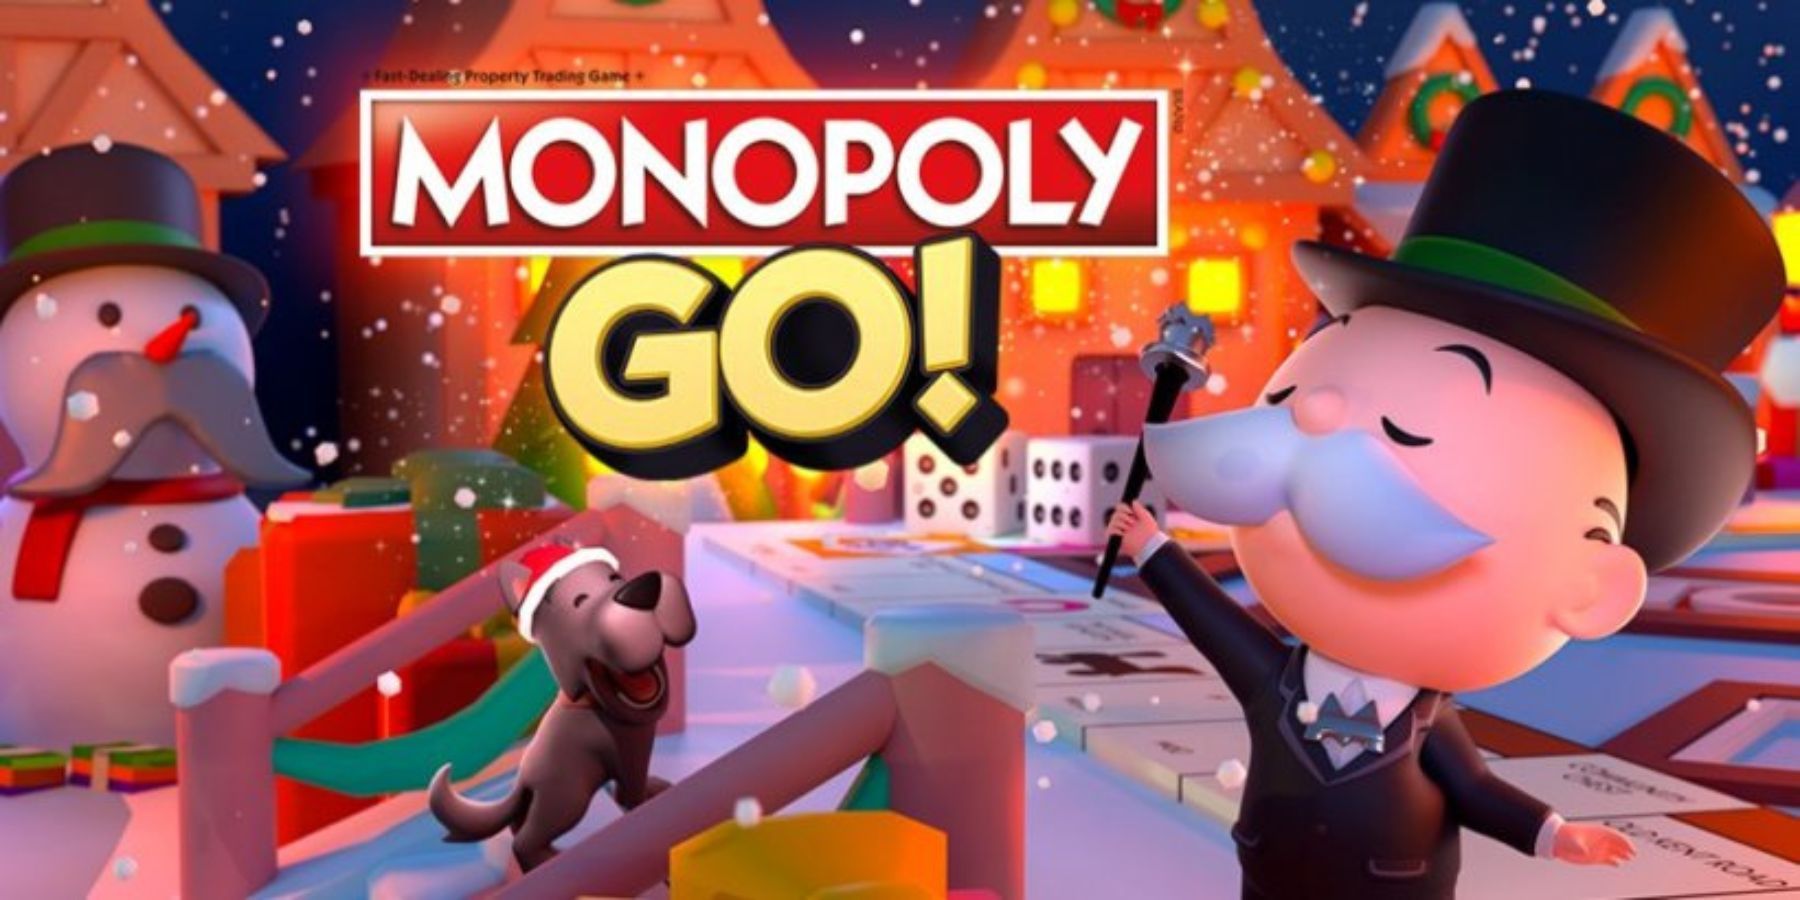 monopoly go event image